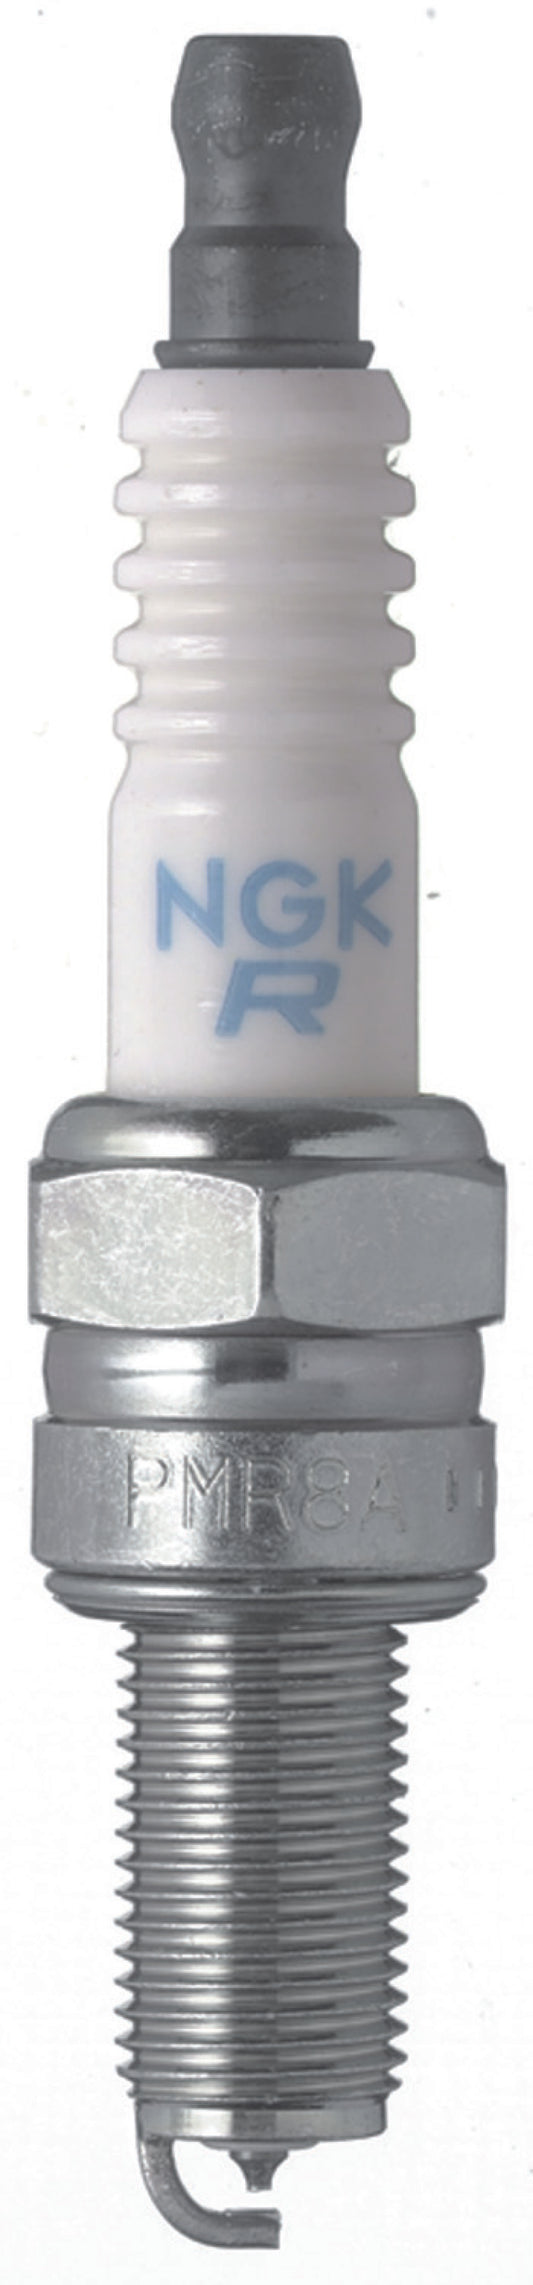 NGK Nickel Spark Plug Box of 4 (CR7EB)